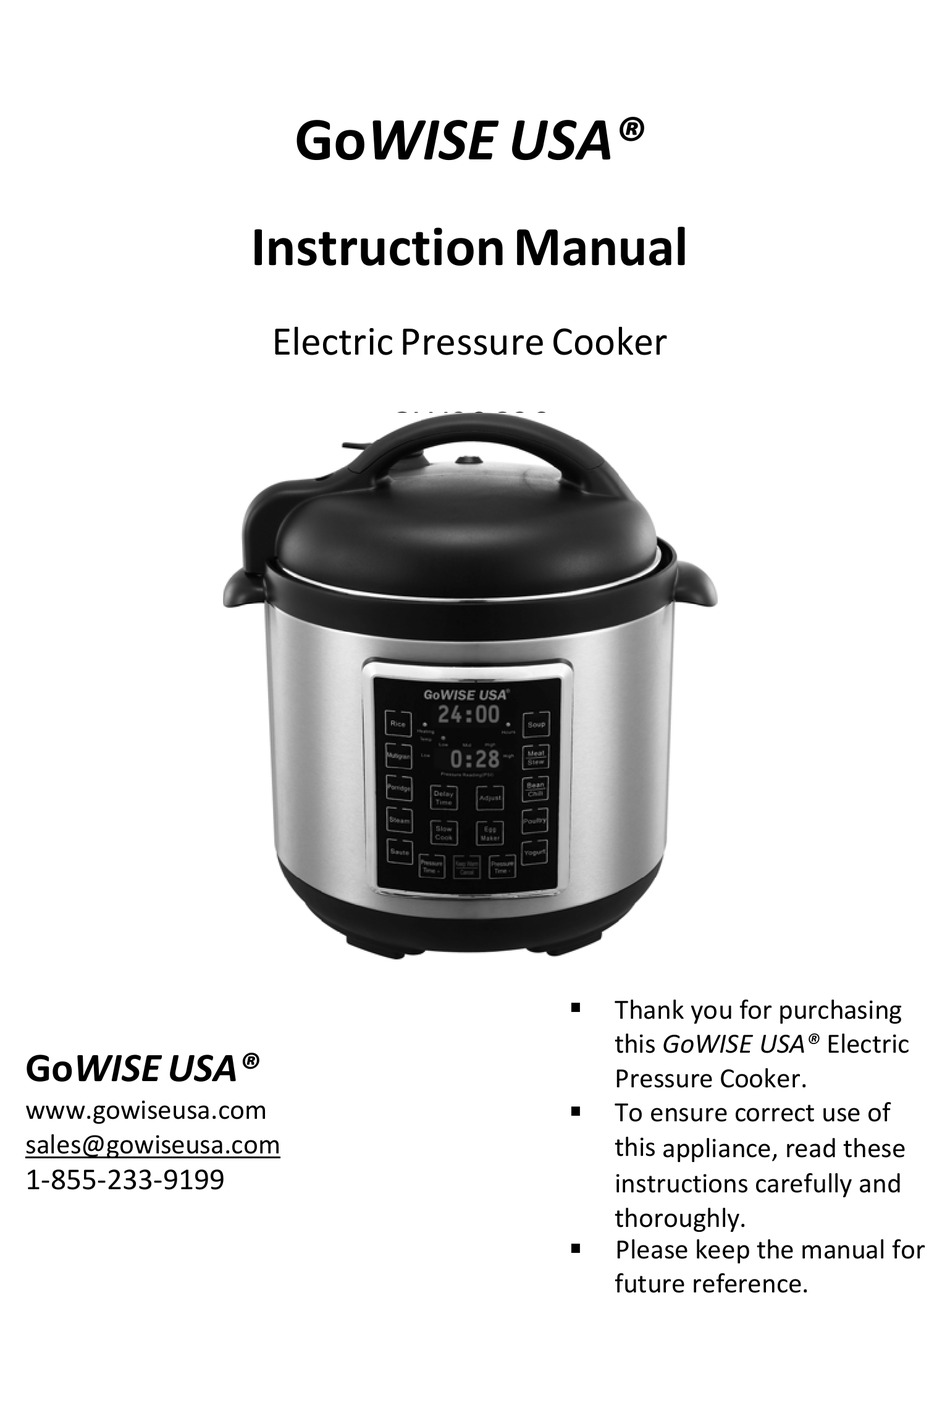 GOWISE USA GW22620 INSTRUCTION MANUAL Pdf Download | ManualsLib